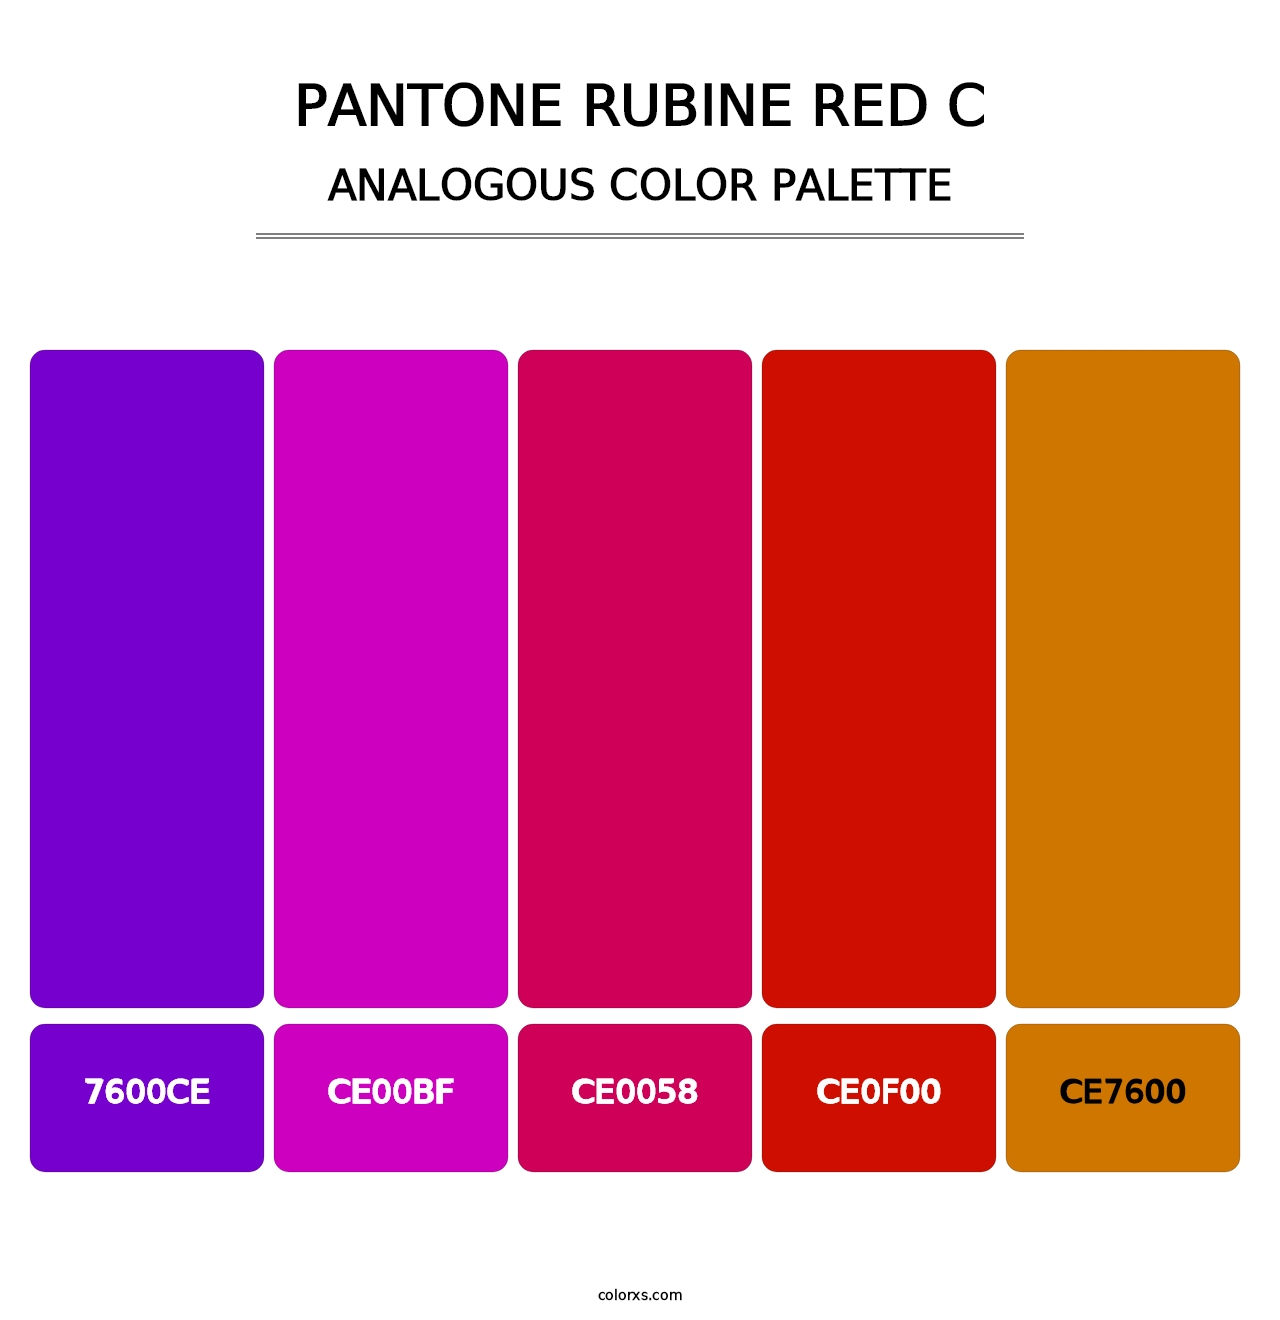 PANTONE Rubine Red C - Analogous Color Palette